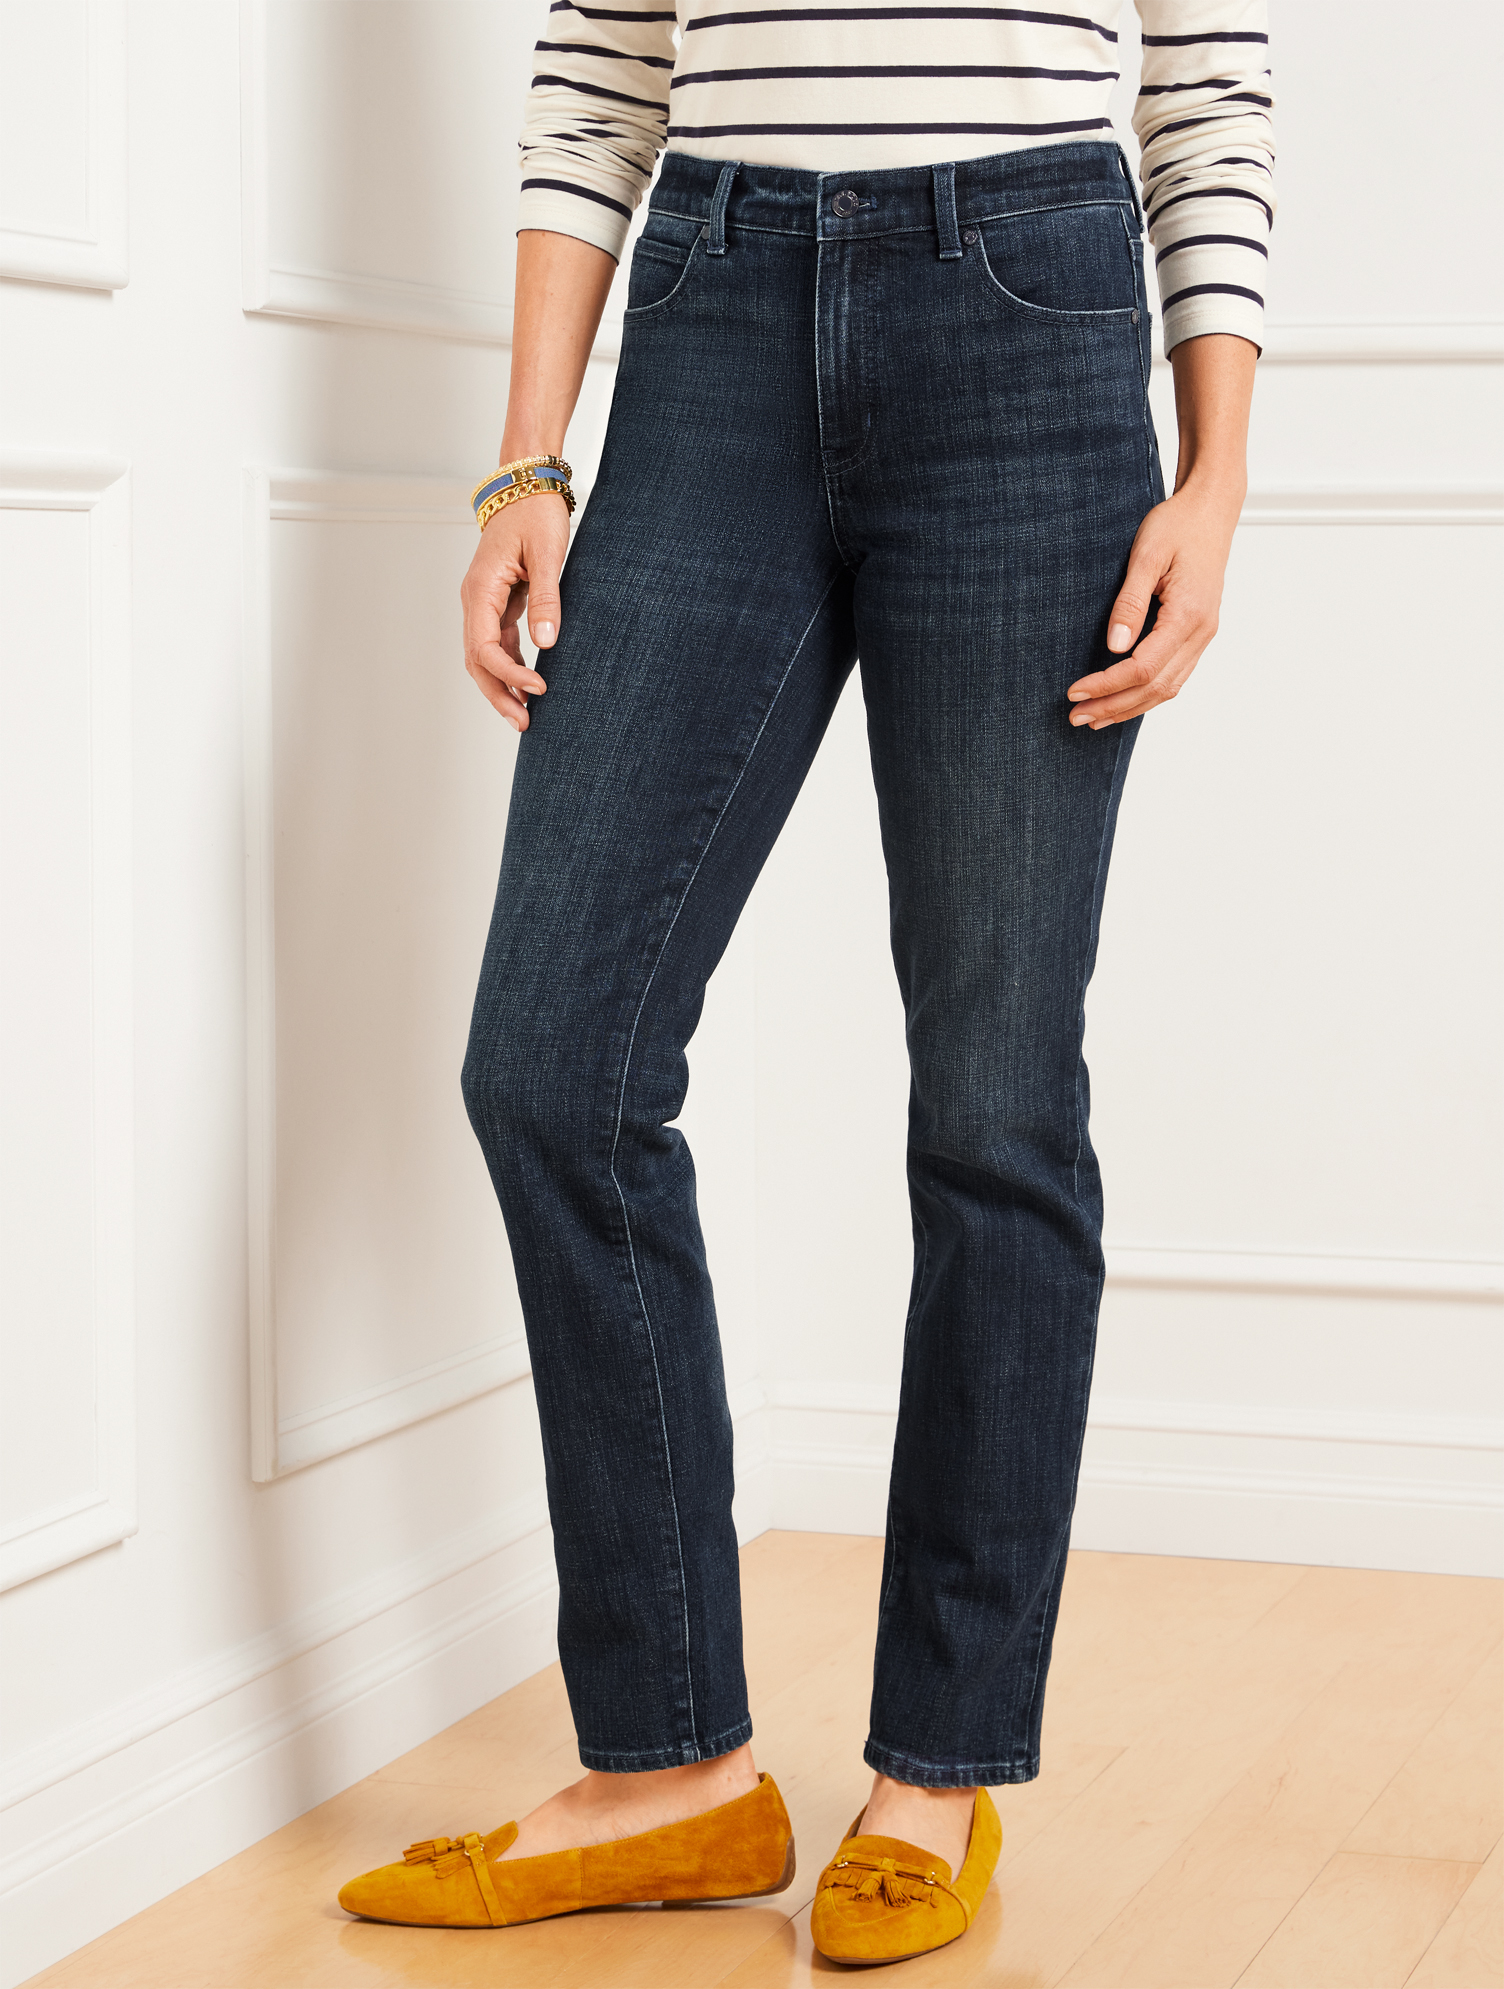 Talbots Petite - Straight Leg Jeans - Florence Wash - Curvy Fit - 16